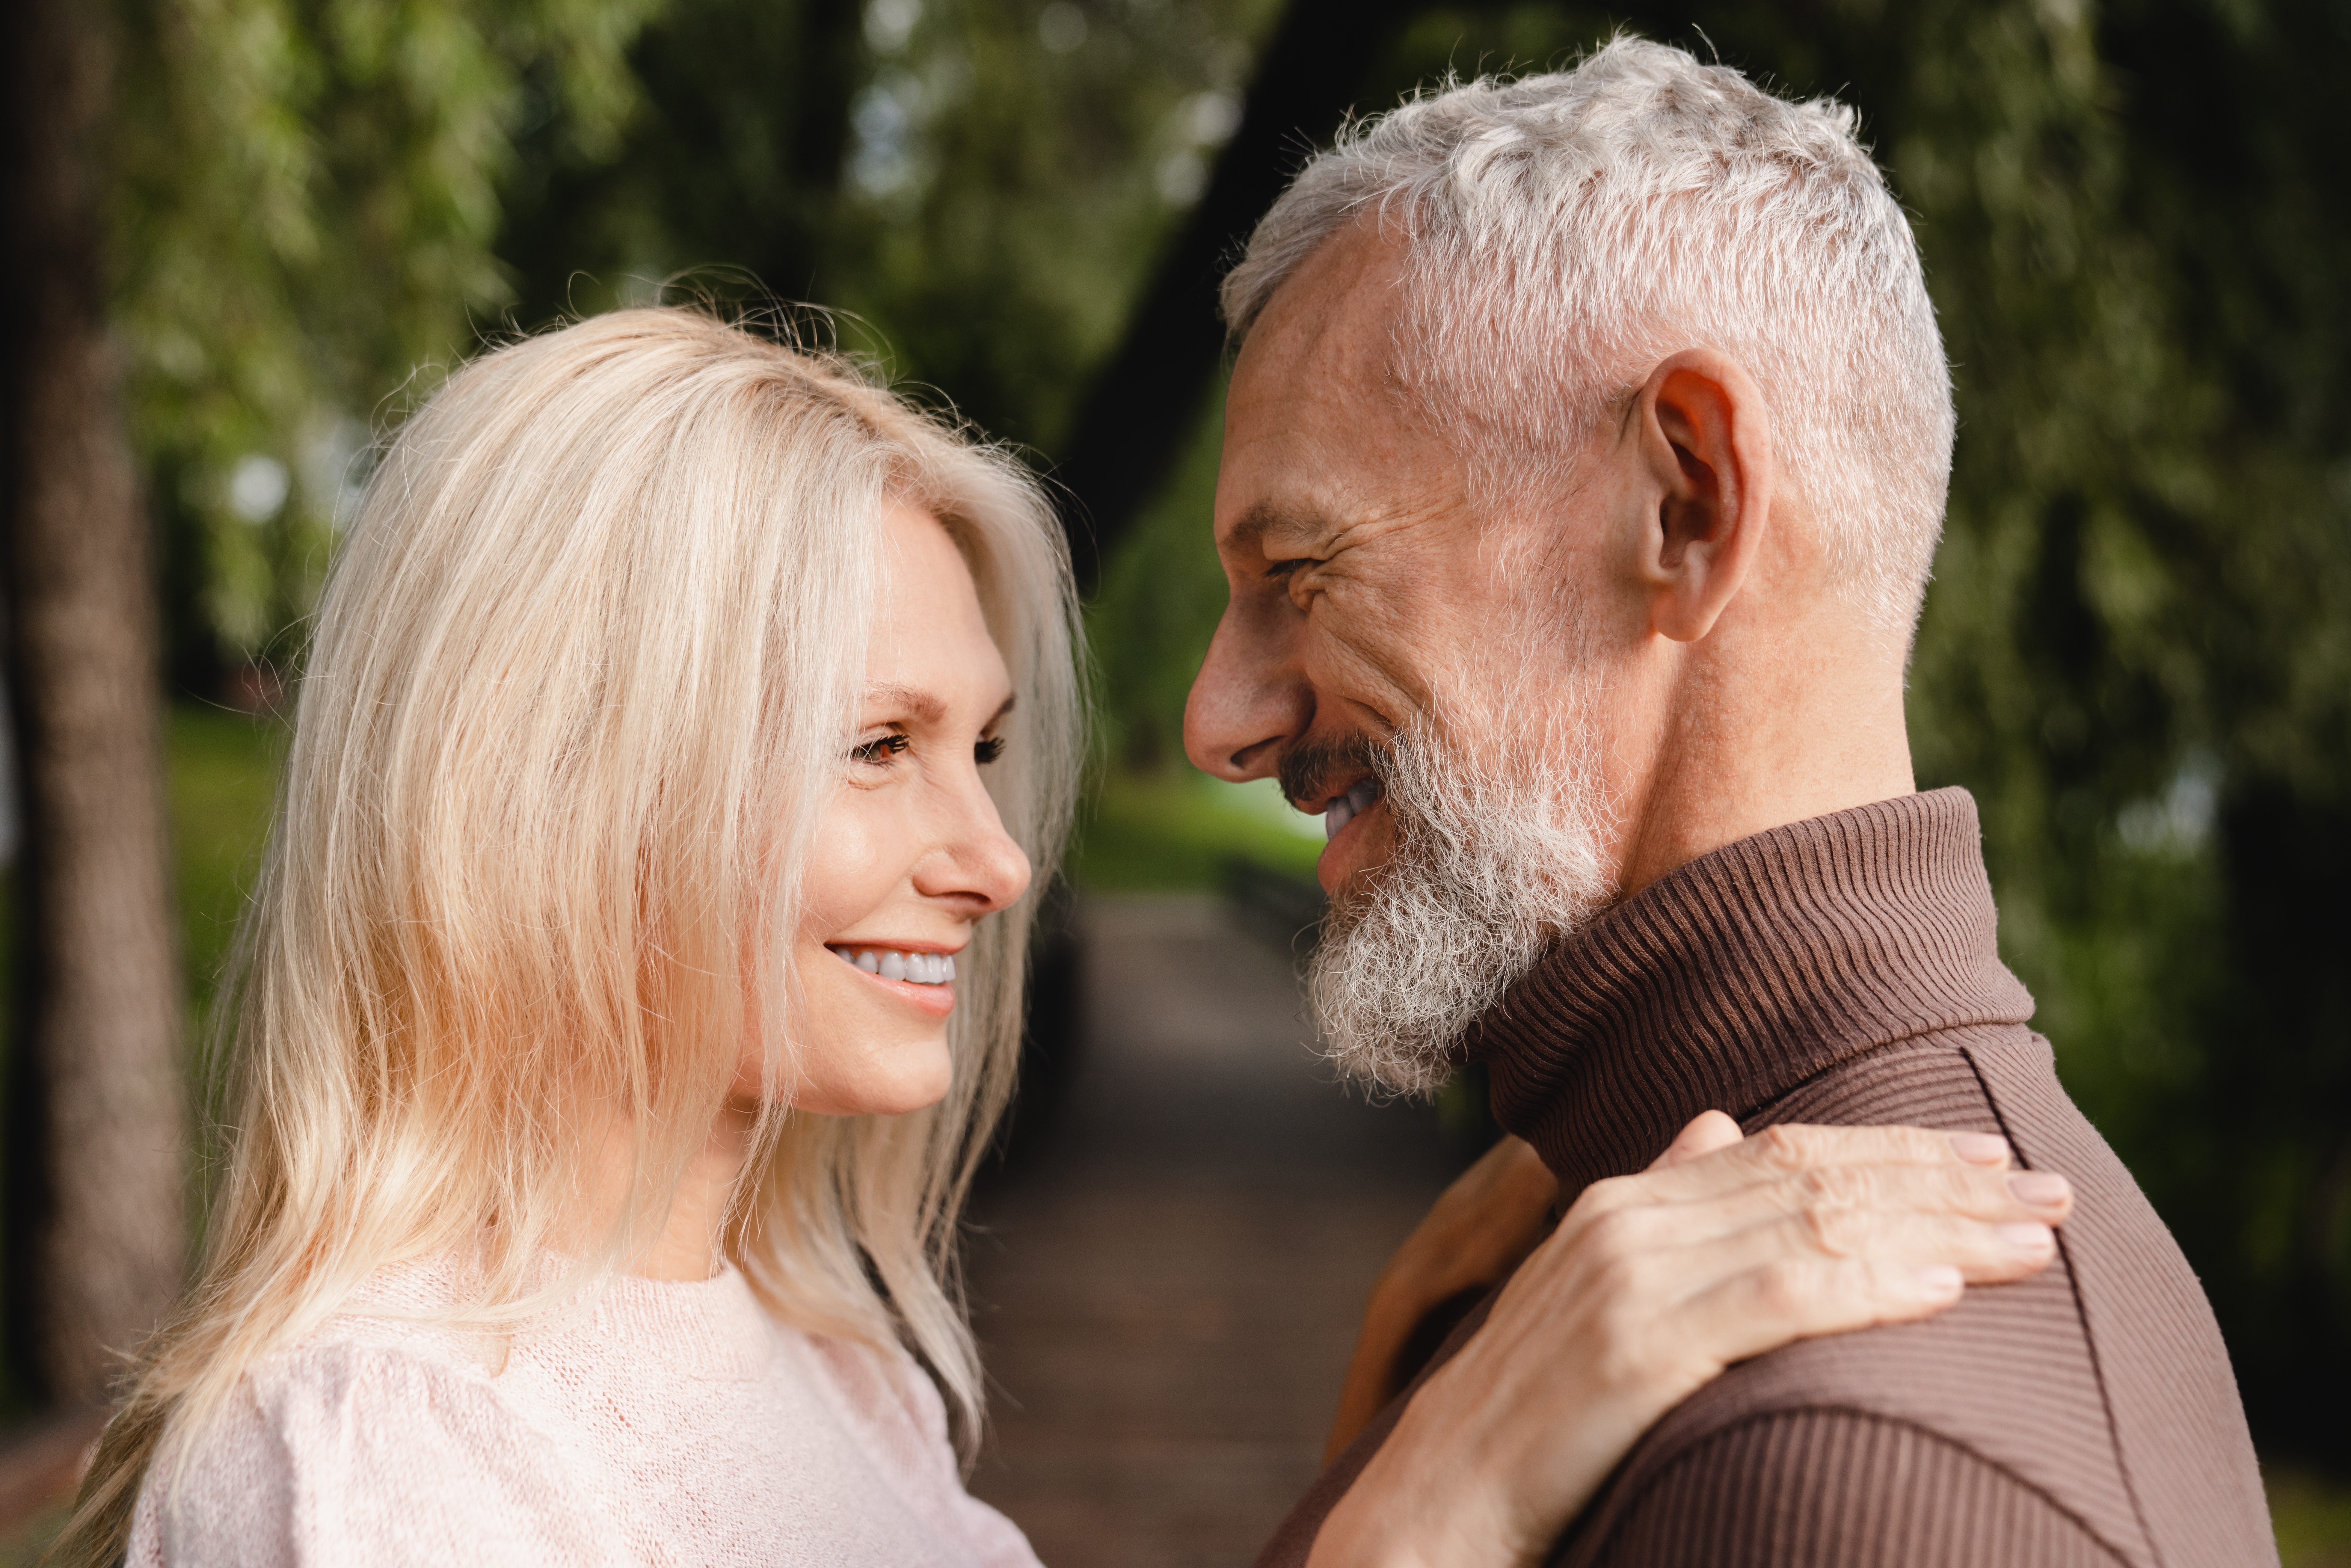 A loving senior couple | Source: Shutterstock